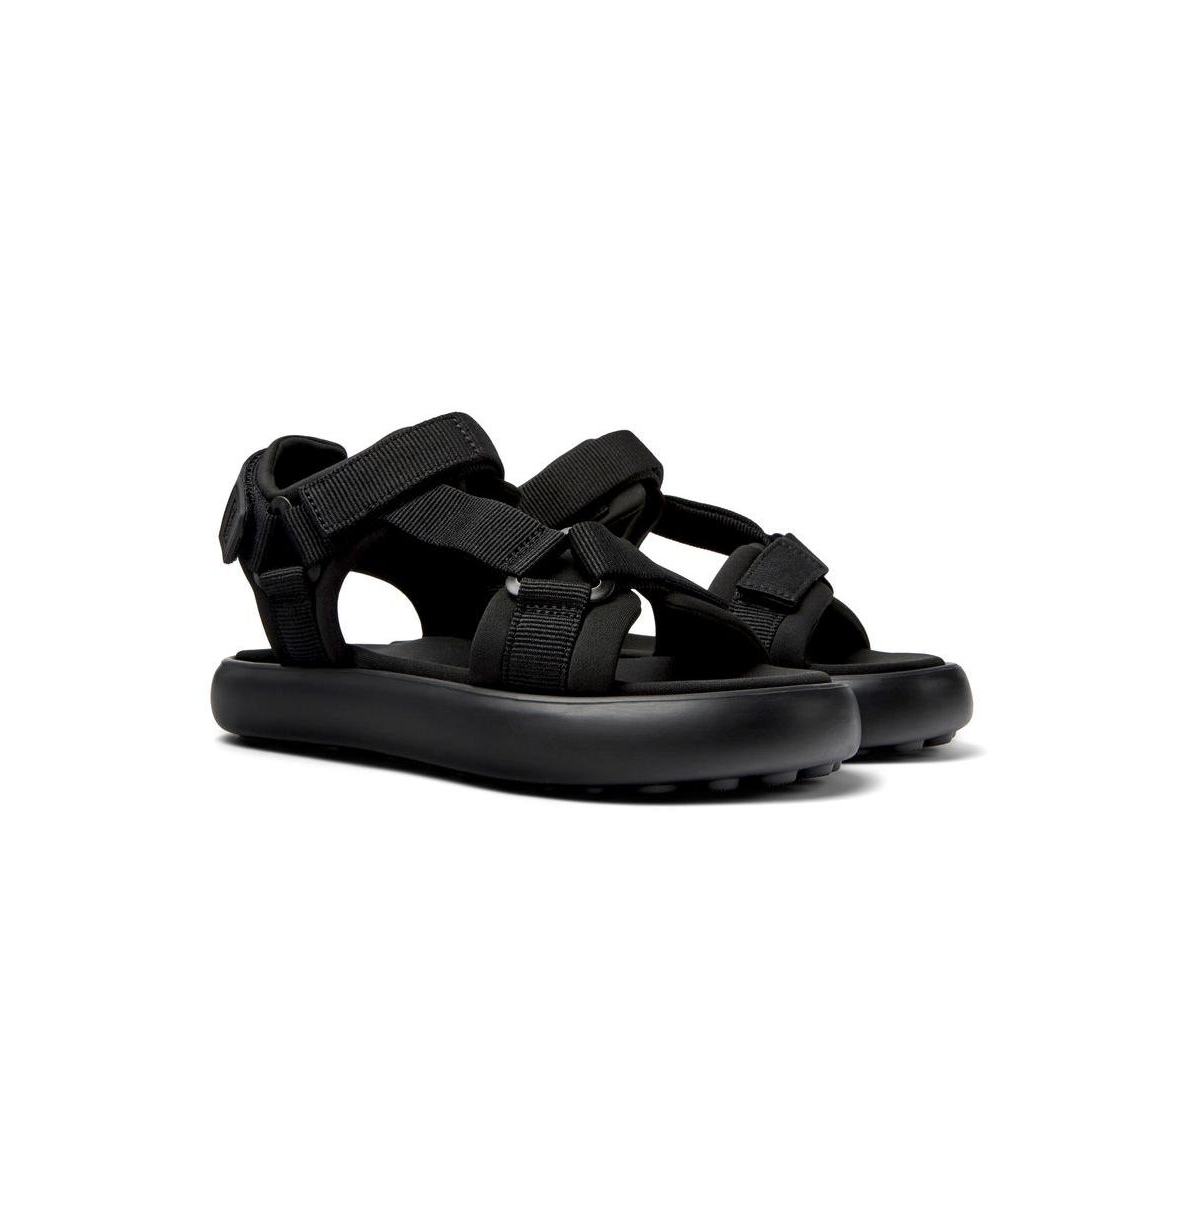 Men's Pelotas Flota Sandal Sandals - Black